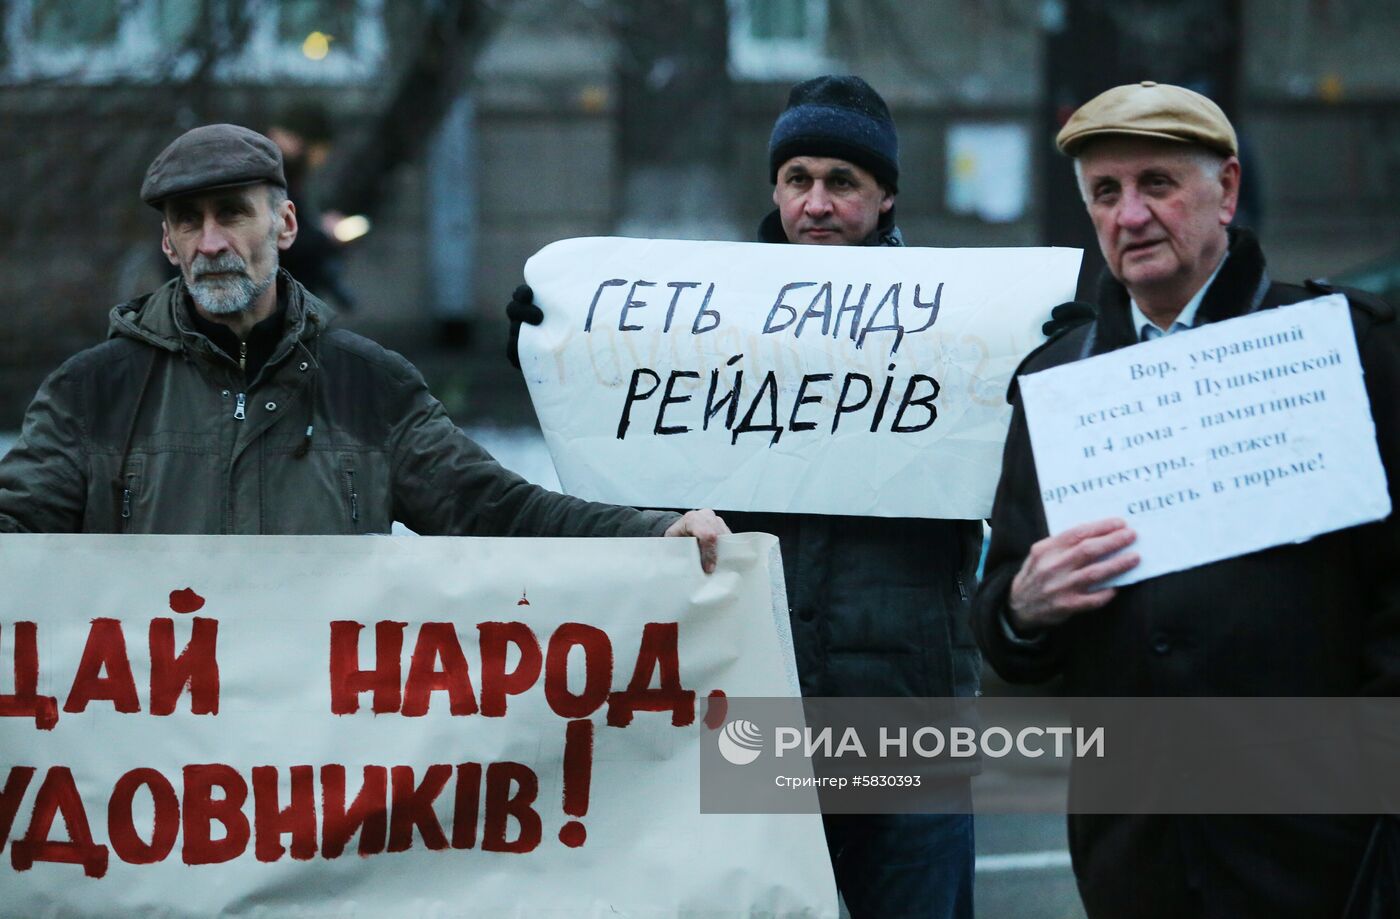 Акция в Киеве против бездействия полиции